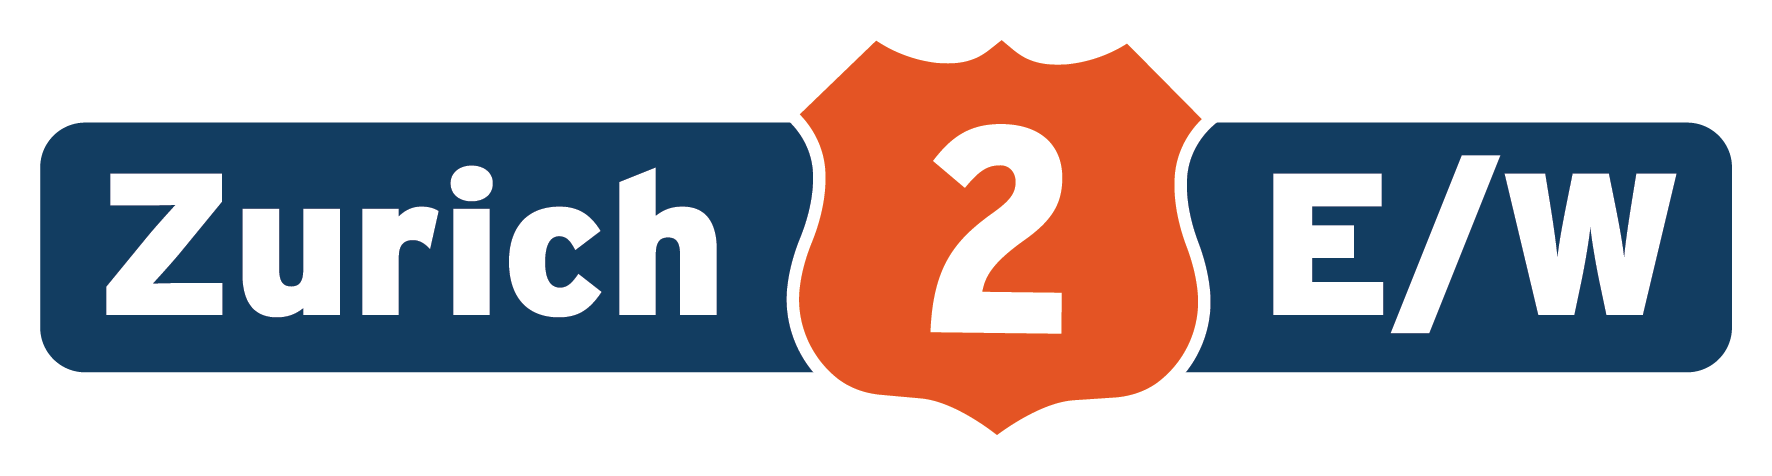 Zurich E/W project logo